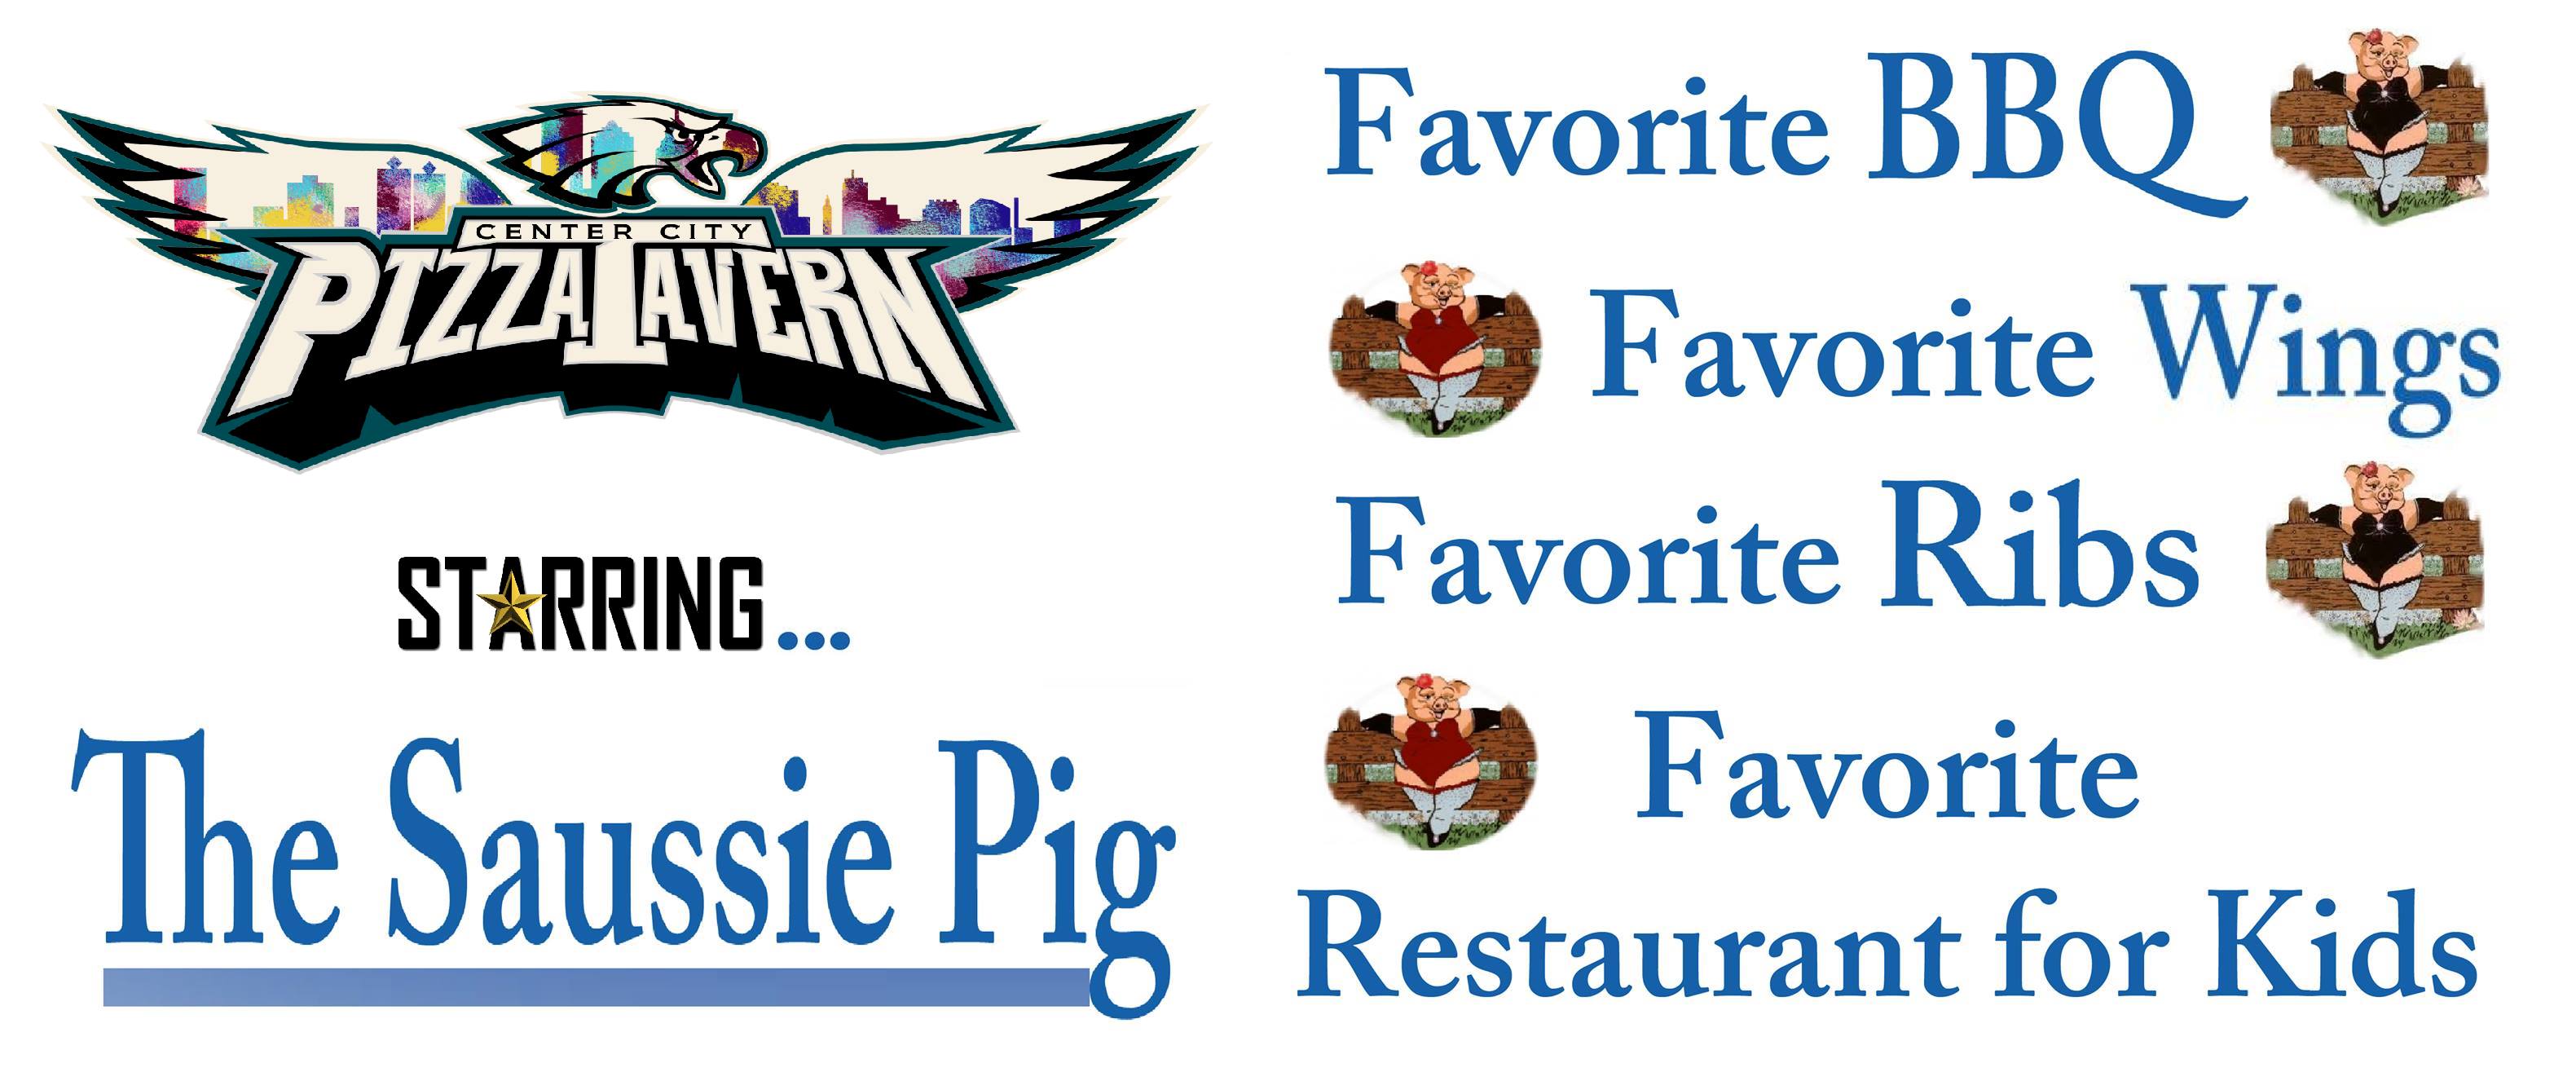 Center City Tavern starring The Saussie Pig